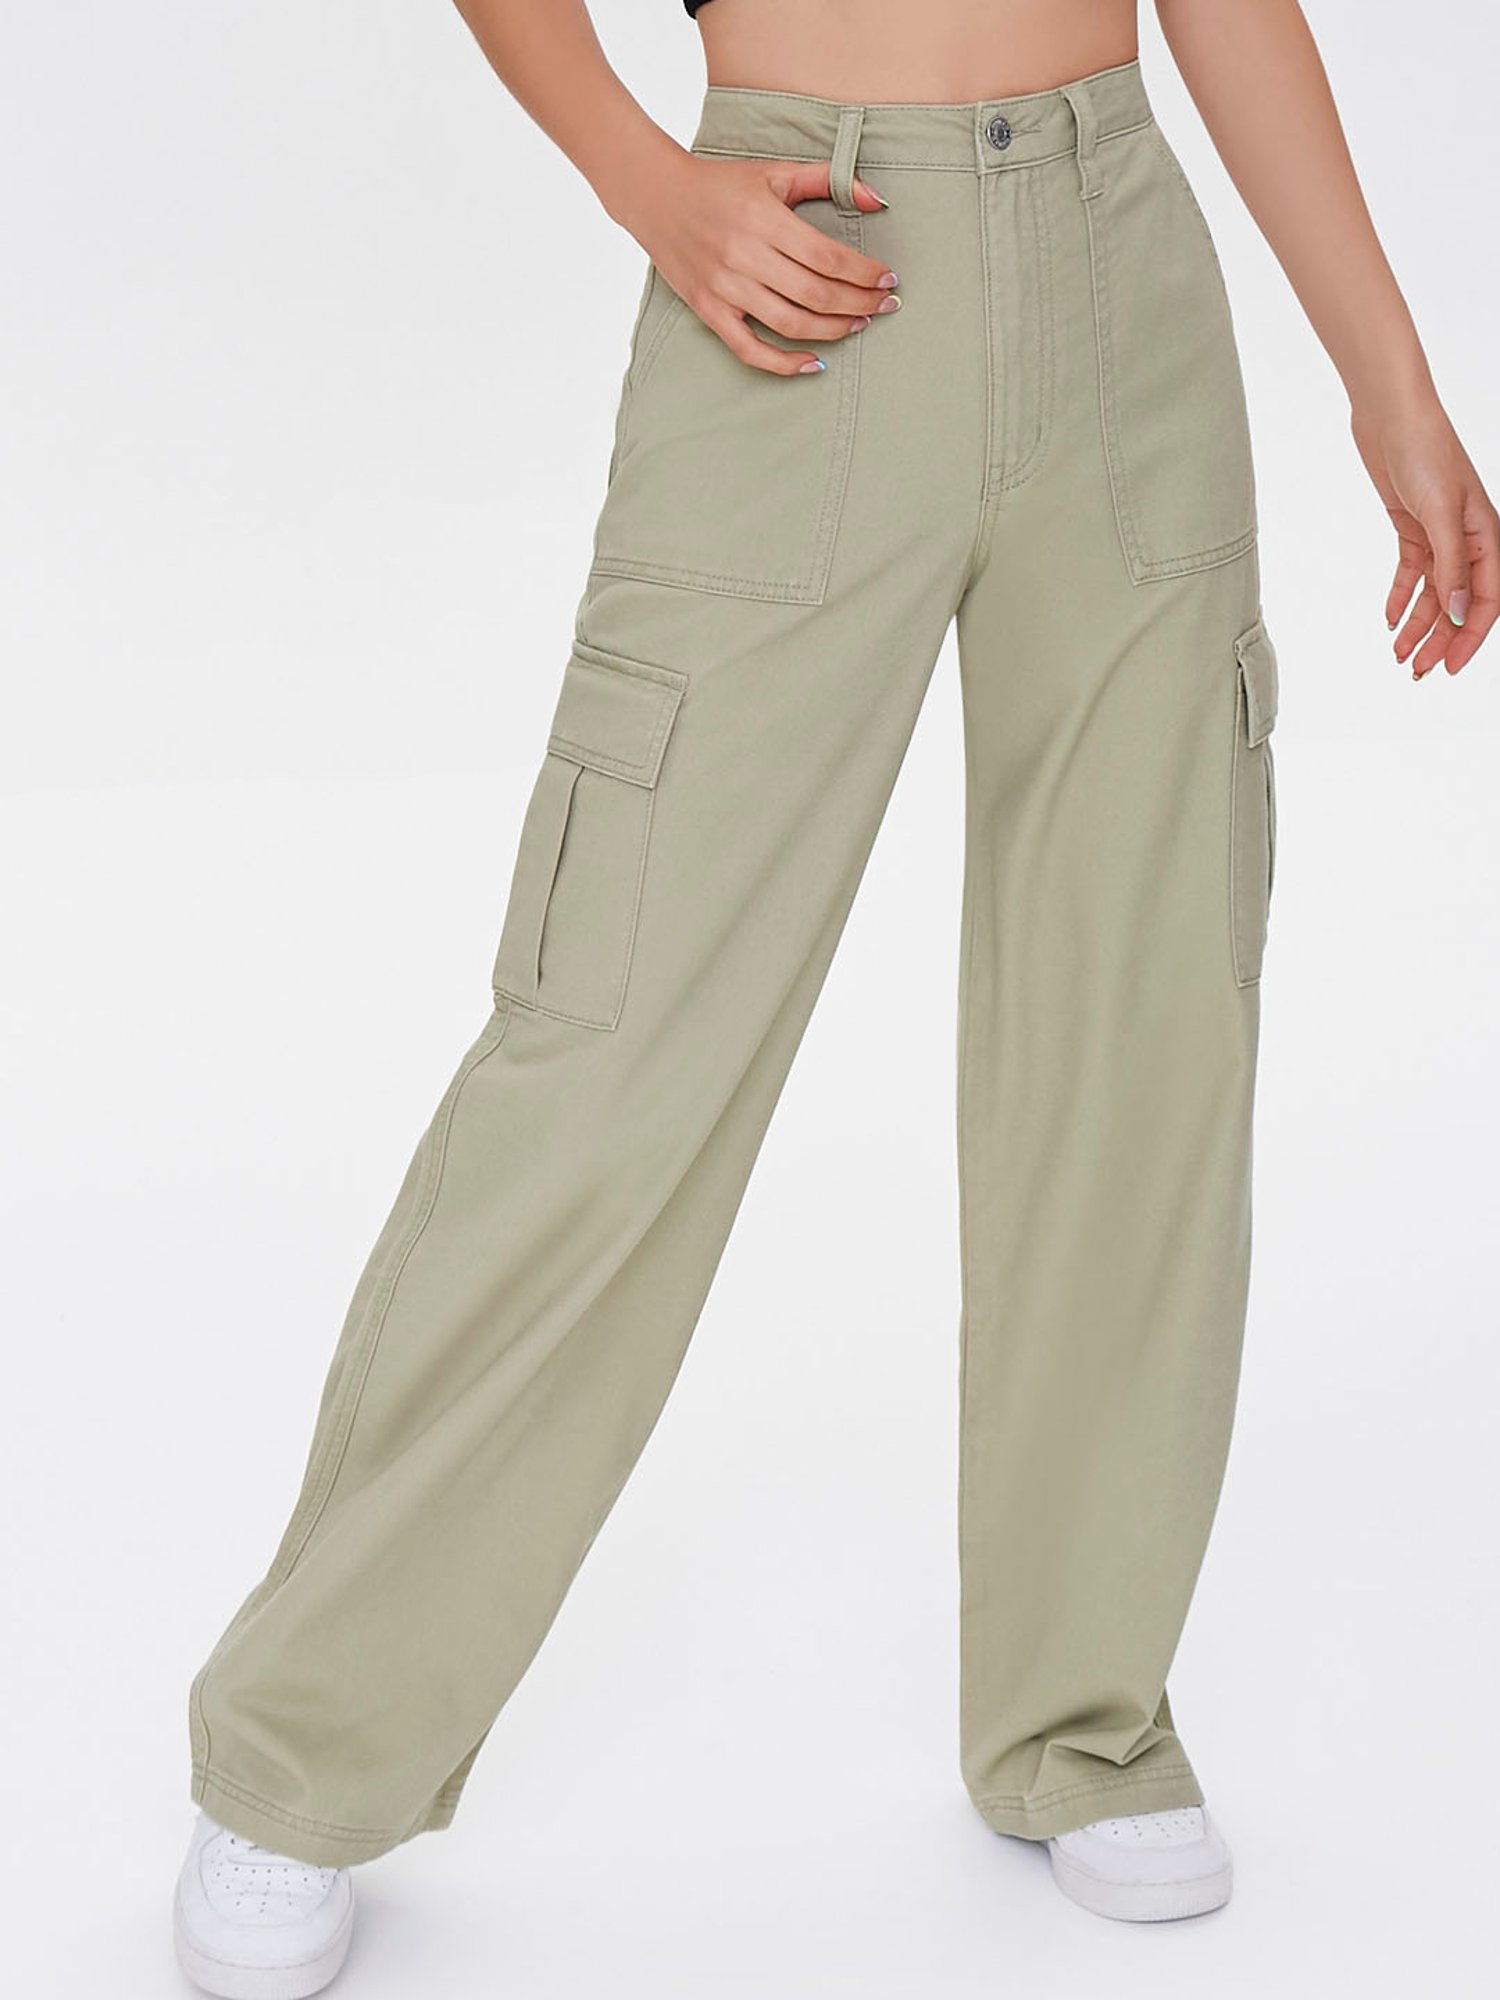 Buy Jaipur Kurti Women's Regular Pants (JKPAT0138- Cream_3XL) at Amazon.in